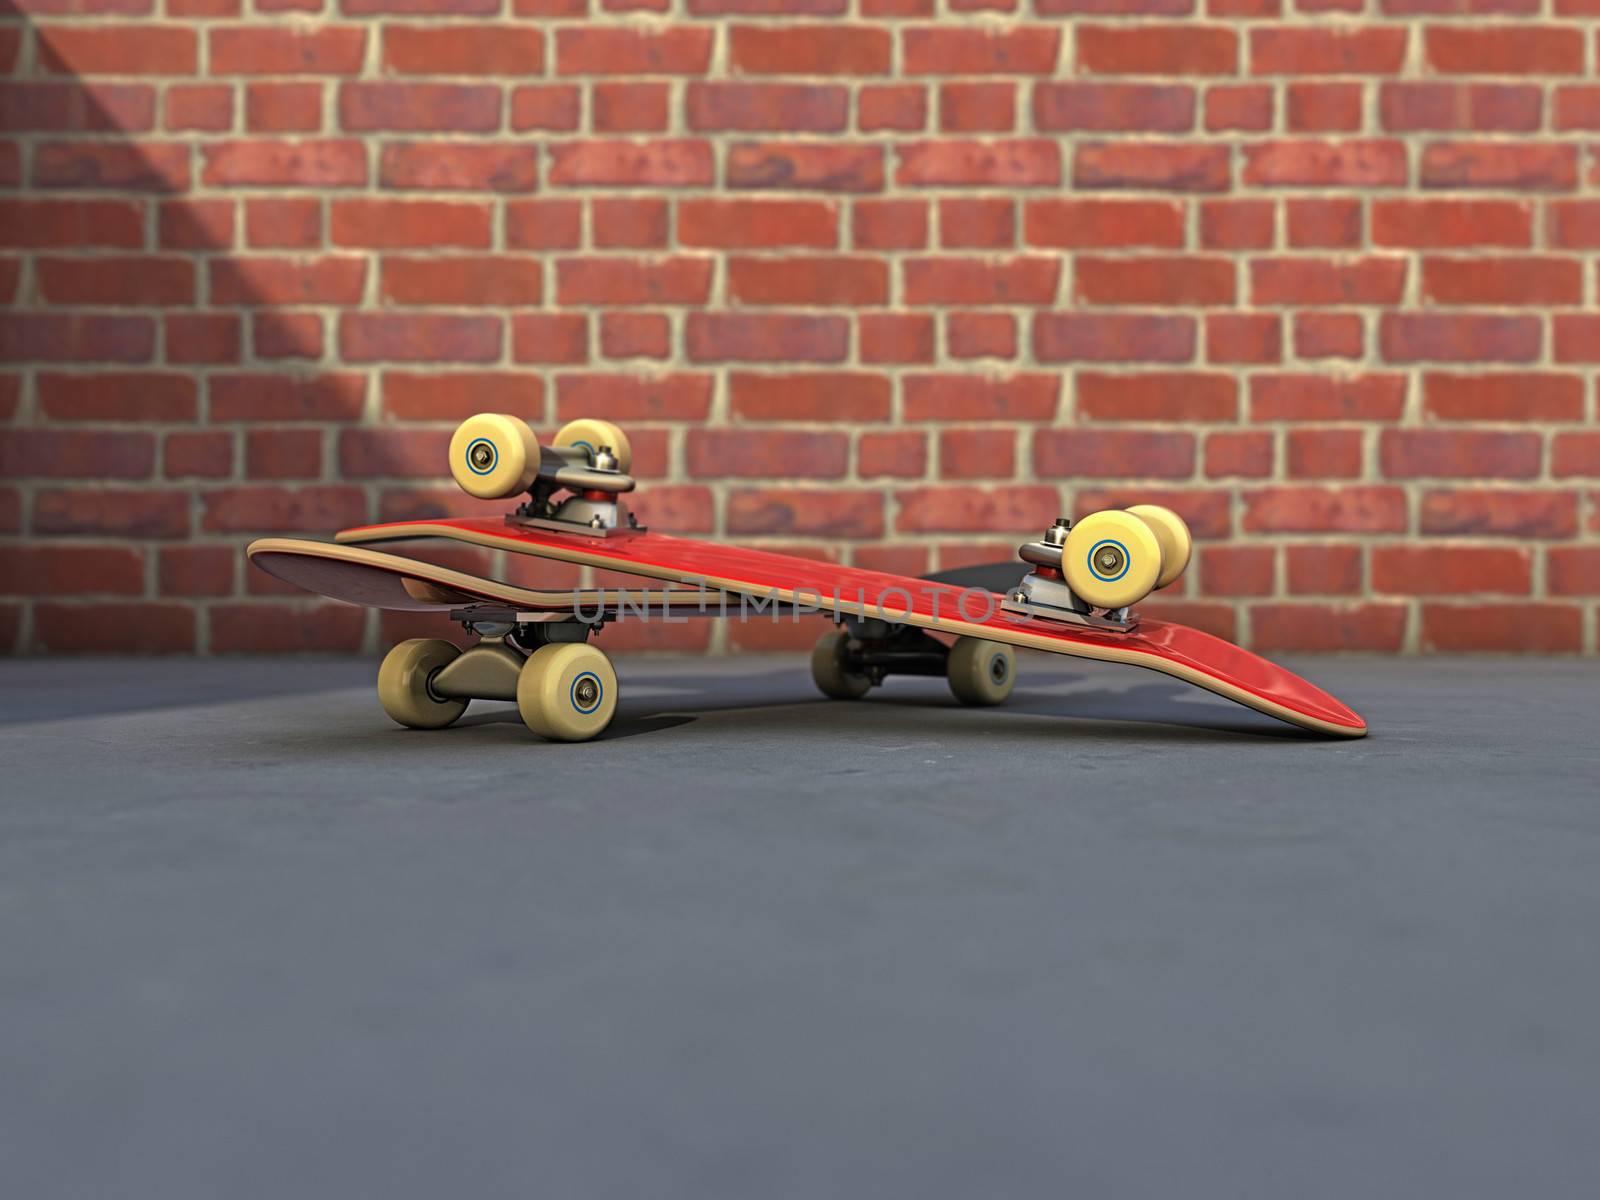 Street skateboard by dynamicfoto